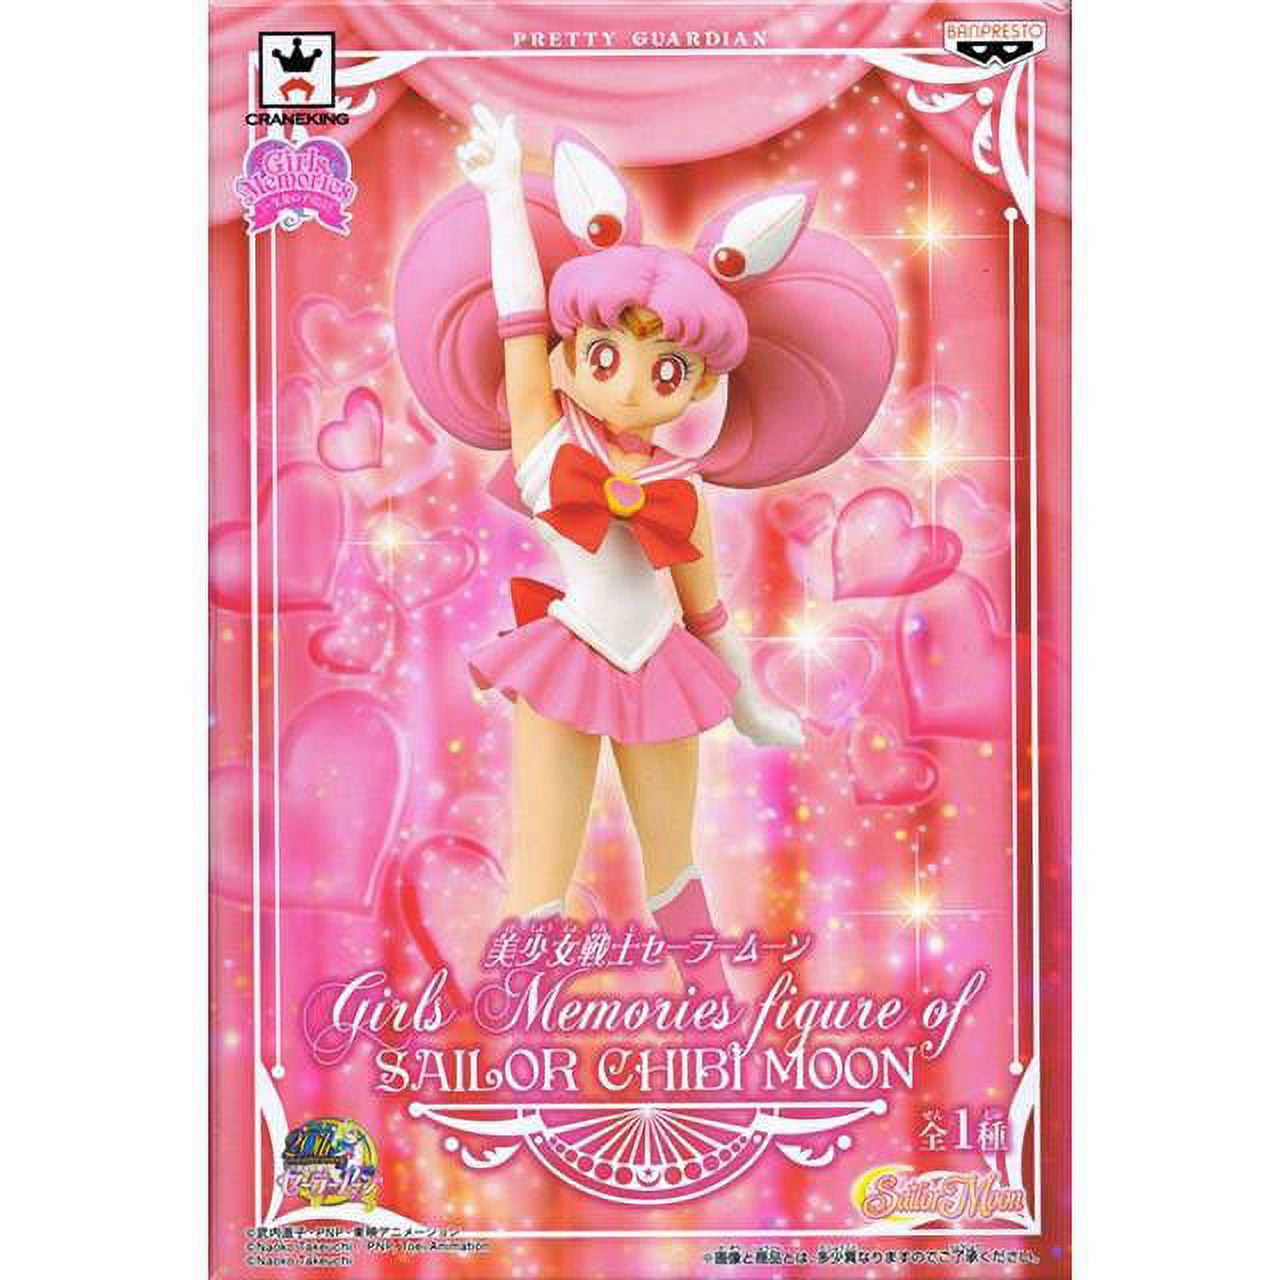 Banpresto Sailor Moon Girls Memory Figure Series 4.3-Inch Sailor Chibi Moon  Figure